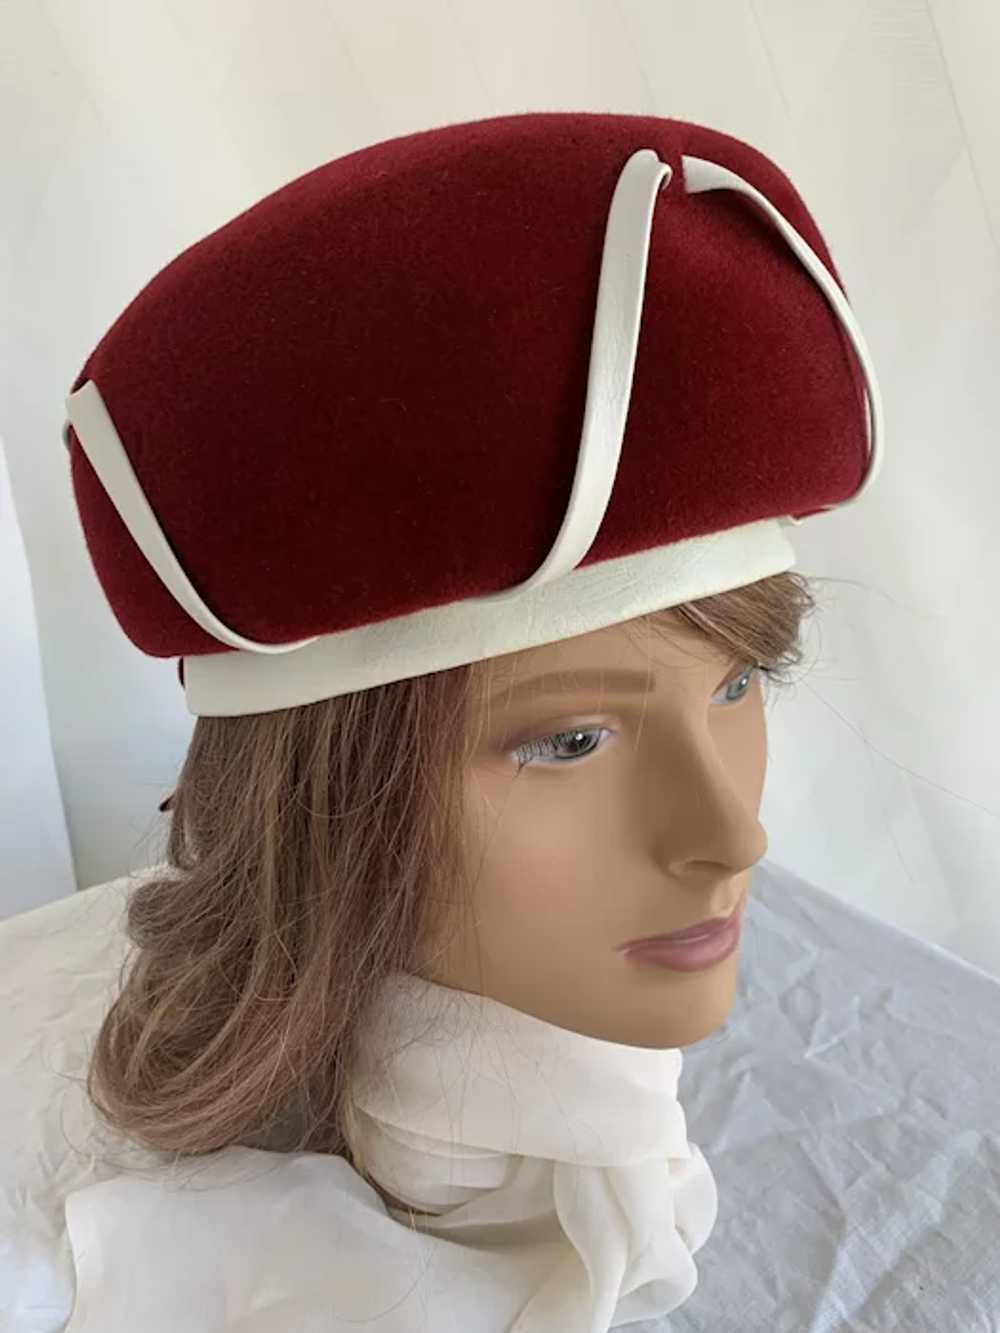 Lecie Vintage 1960s Mod, Red Felted Fur Bubble Hat - image 2